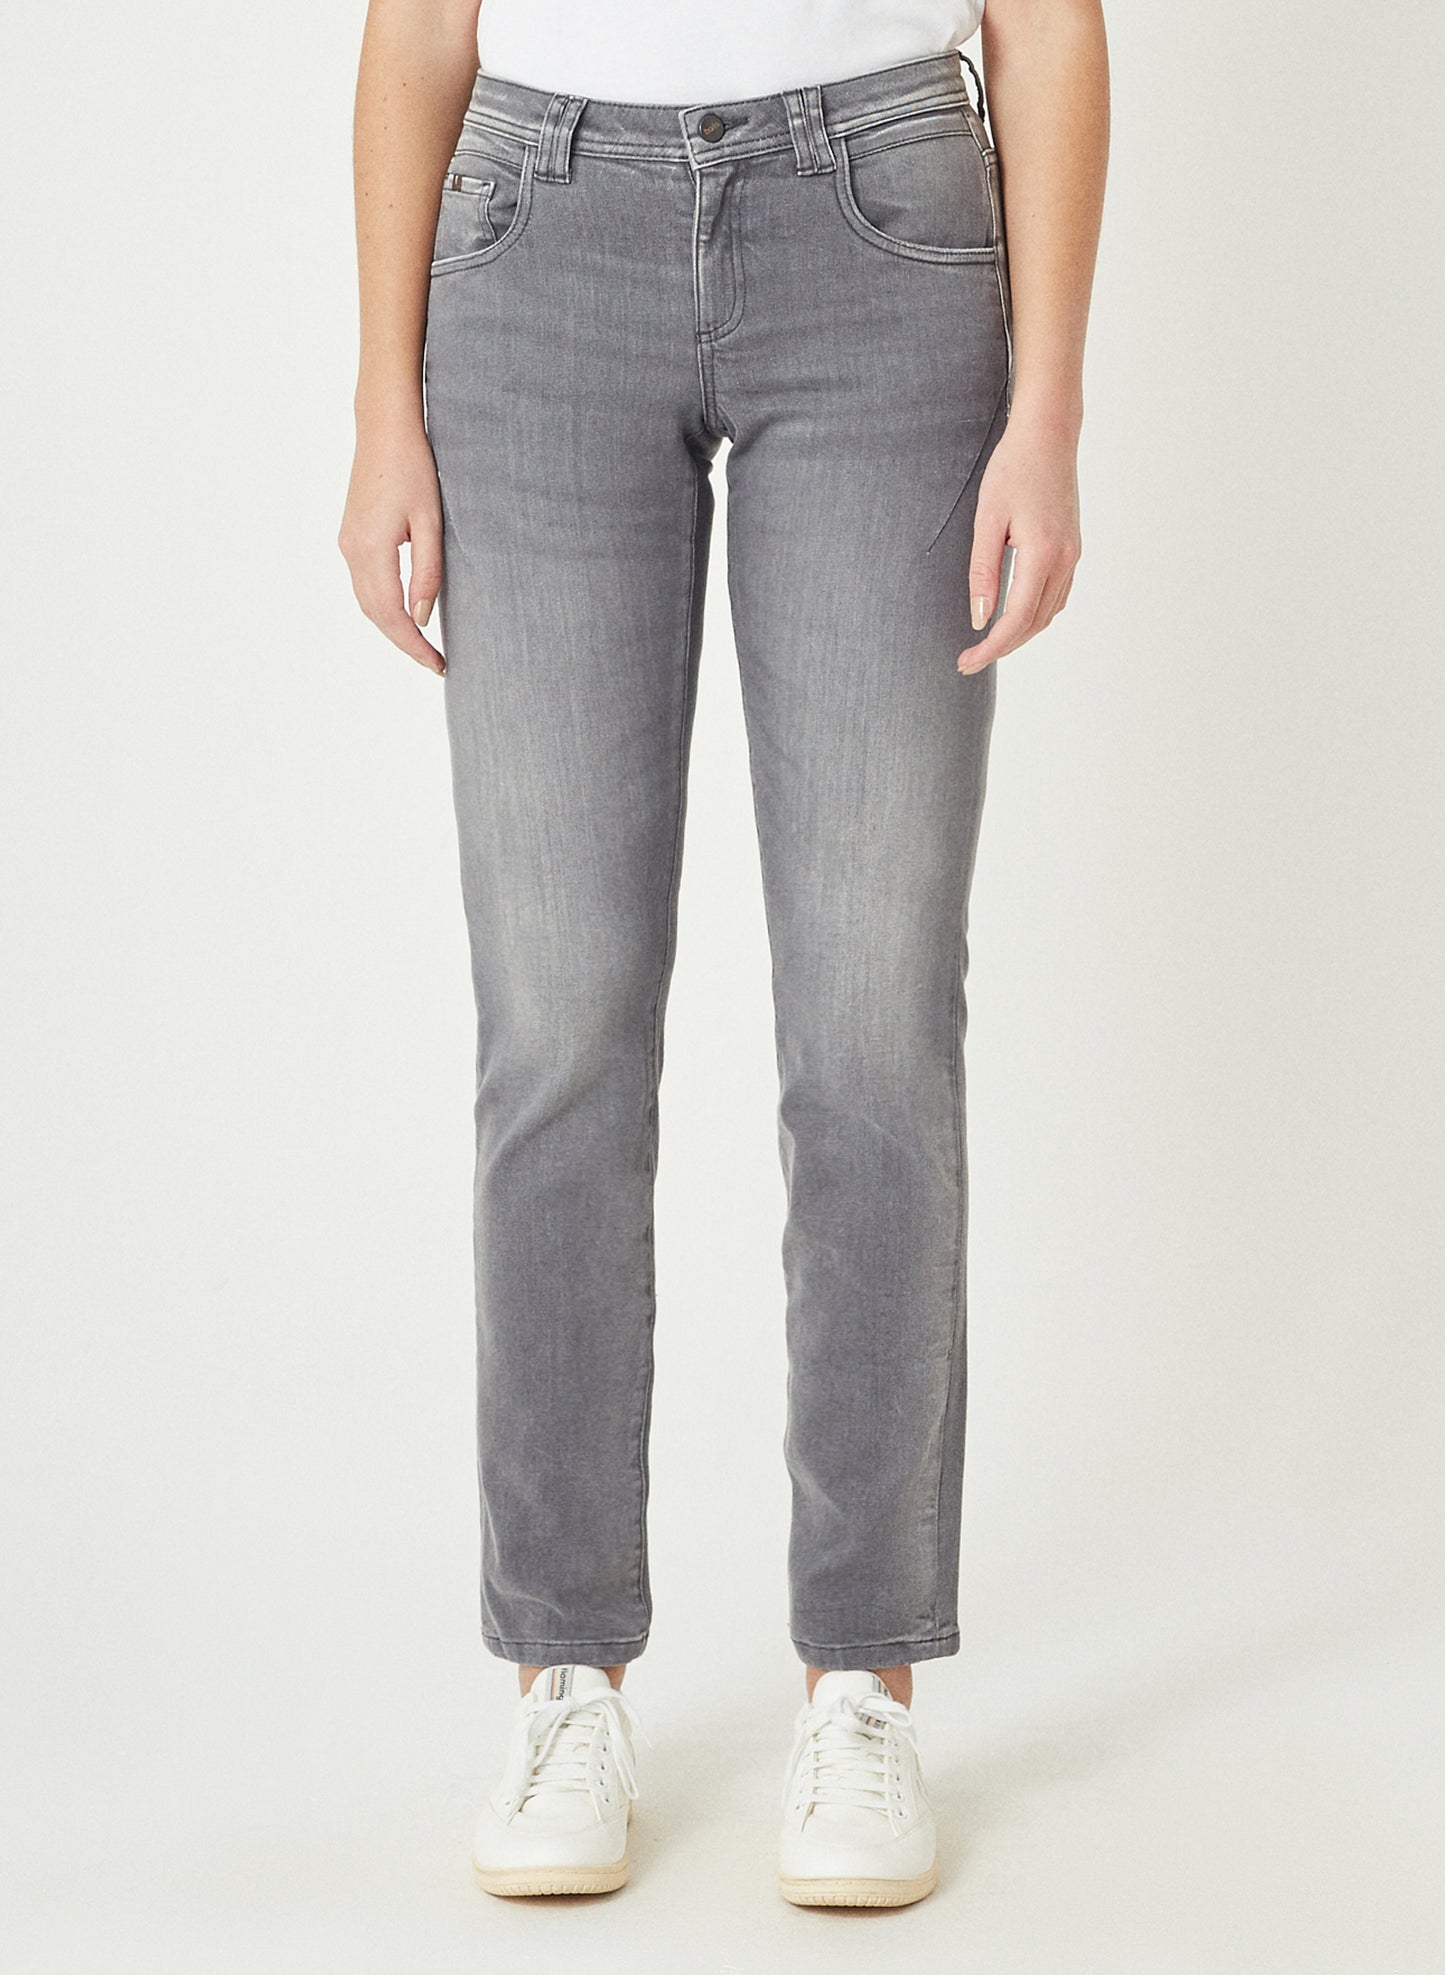 HANNA - Regular Fit Denim Jeans Pant - Grey Denim